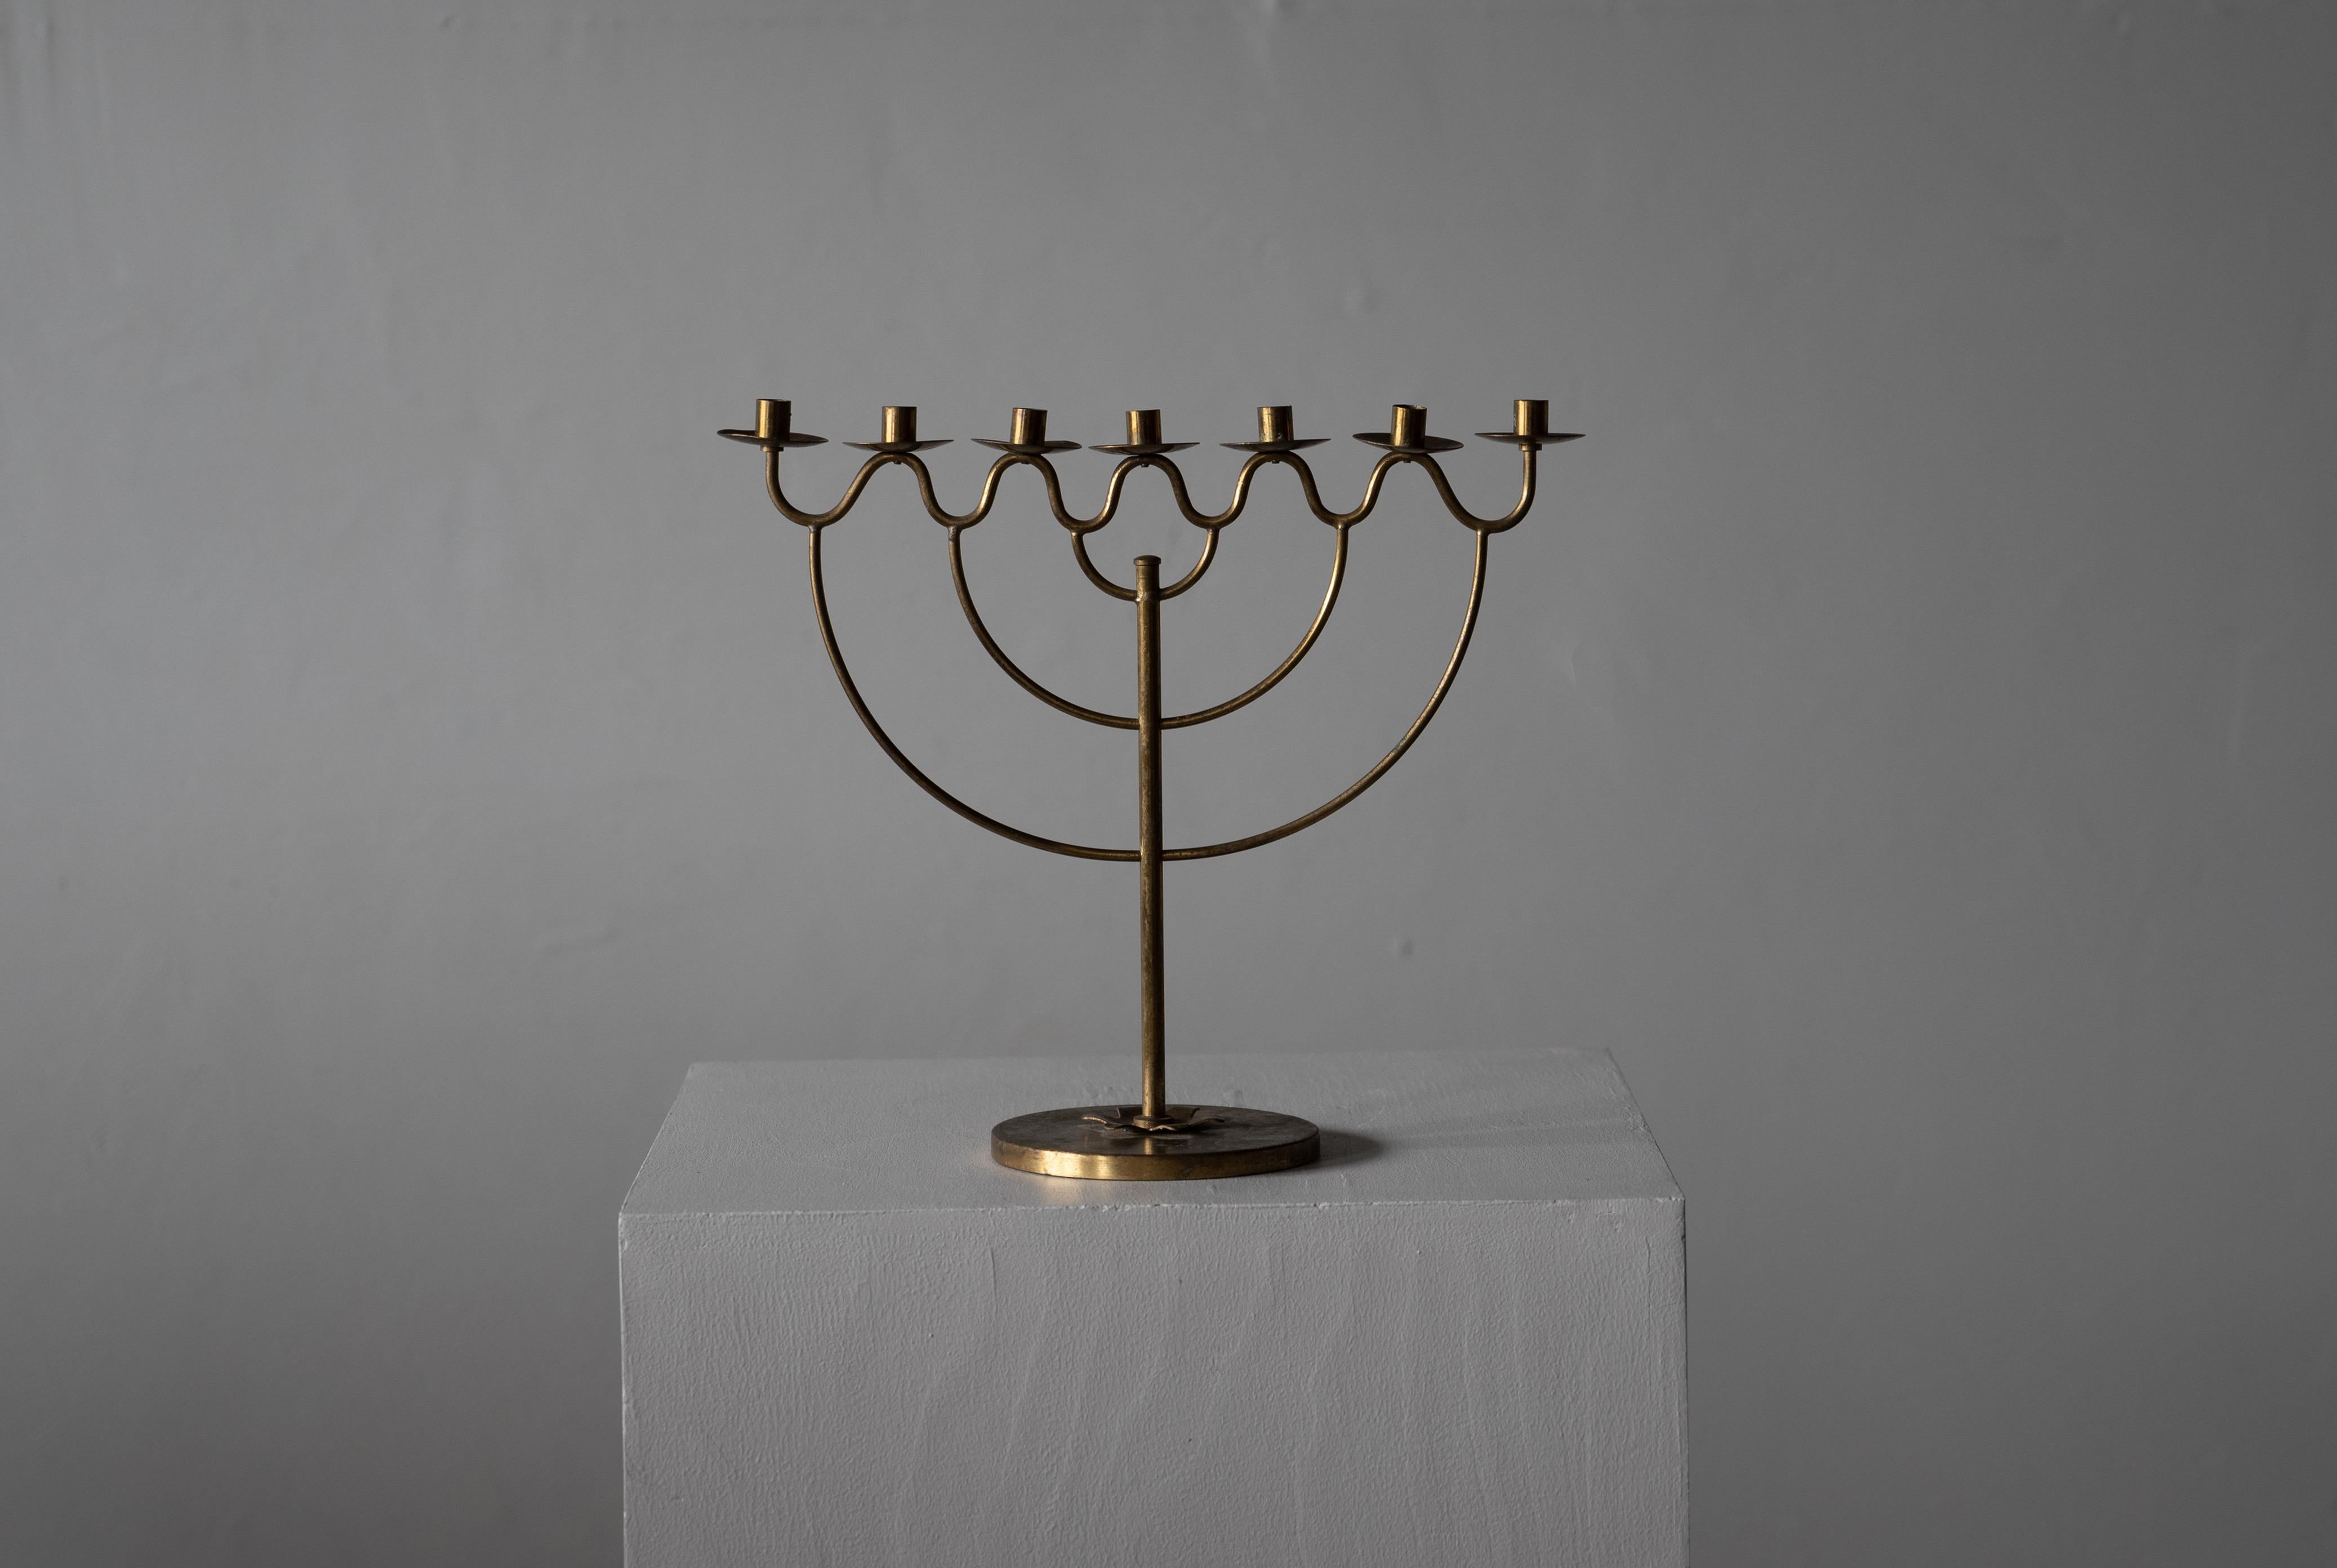 A candelabra, designed and produced in Sweden, c. 1940s.

